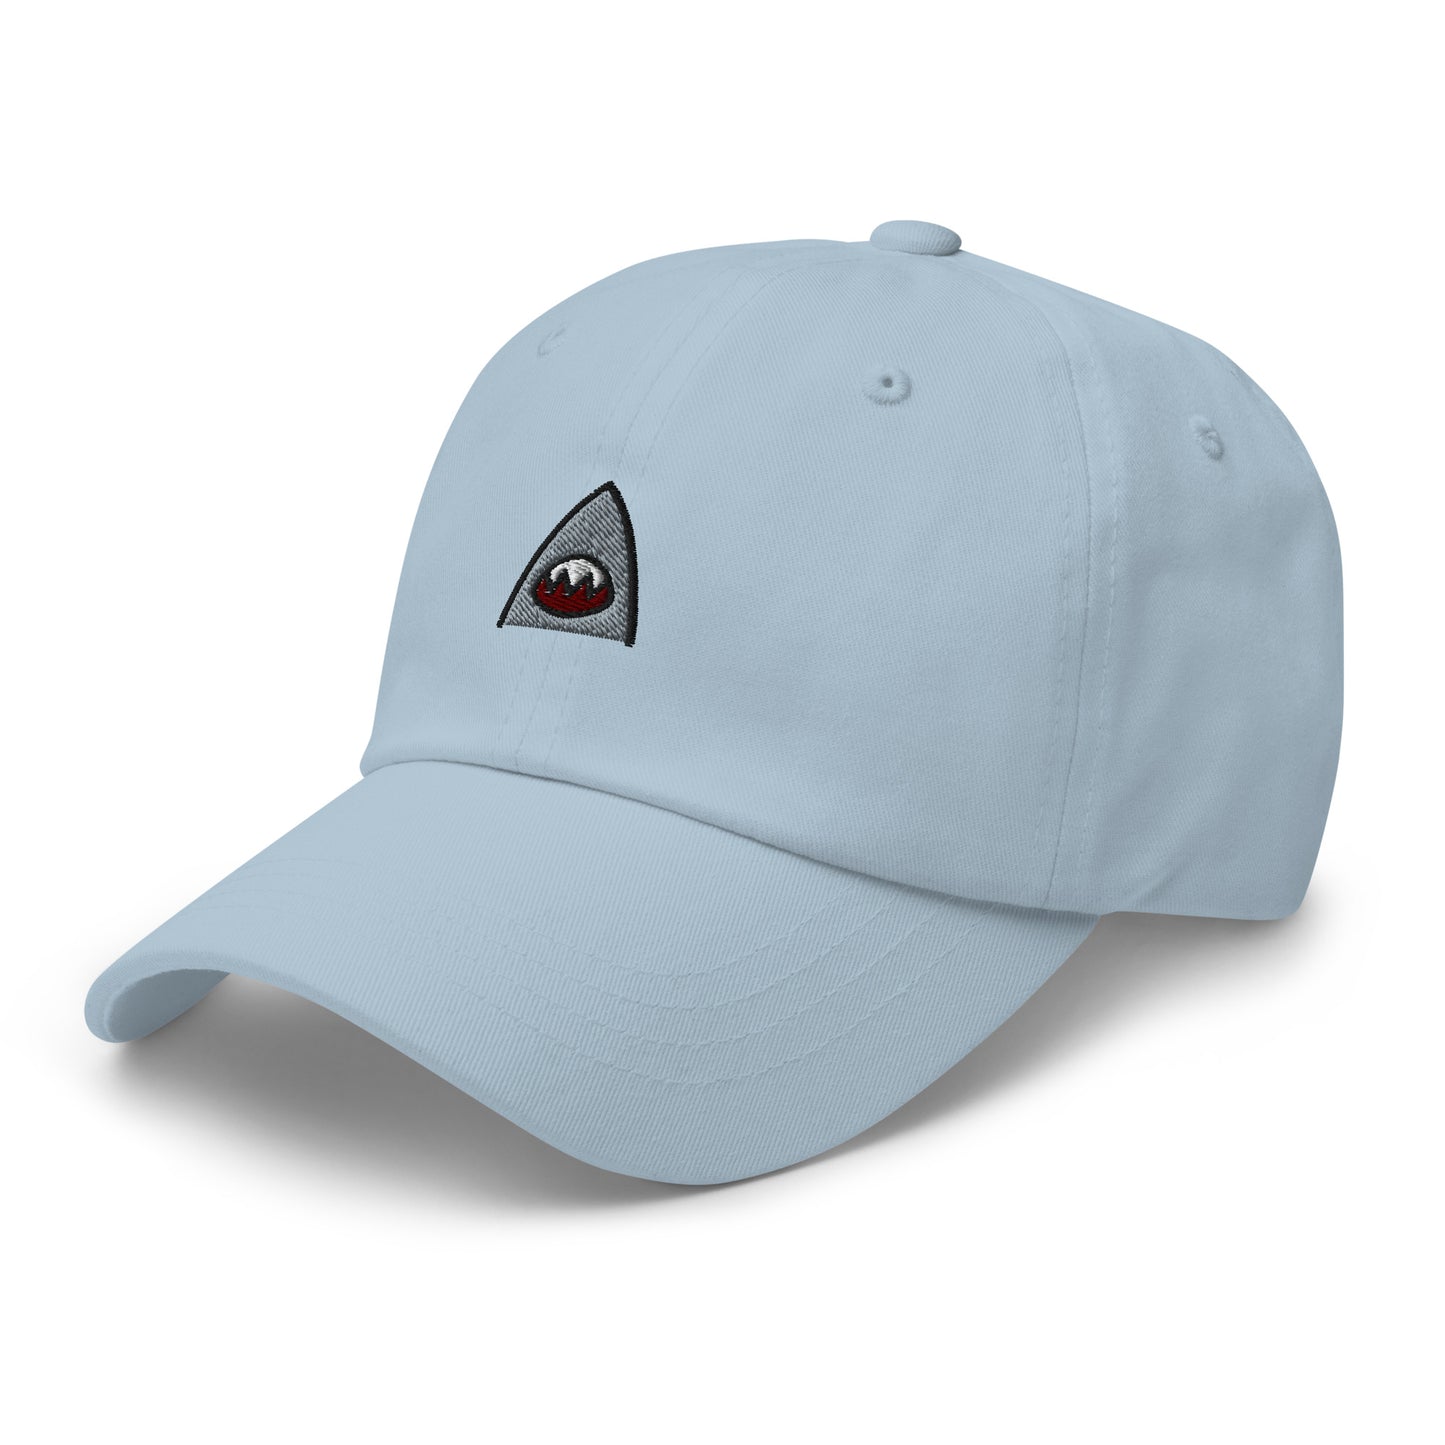 Shark Jaw Embroidered Baseball Cap